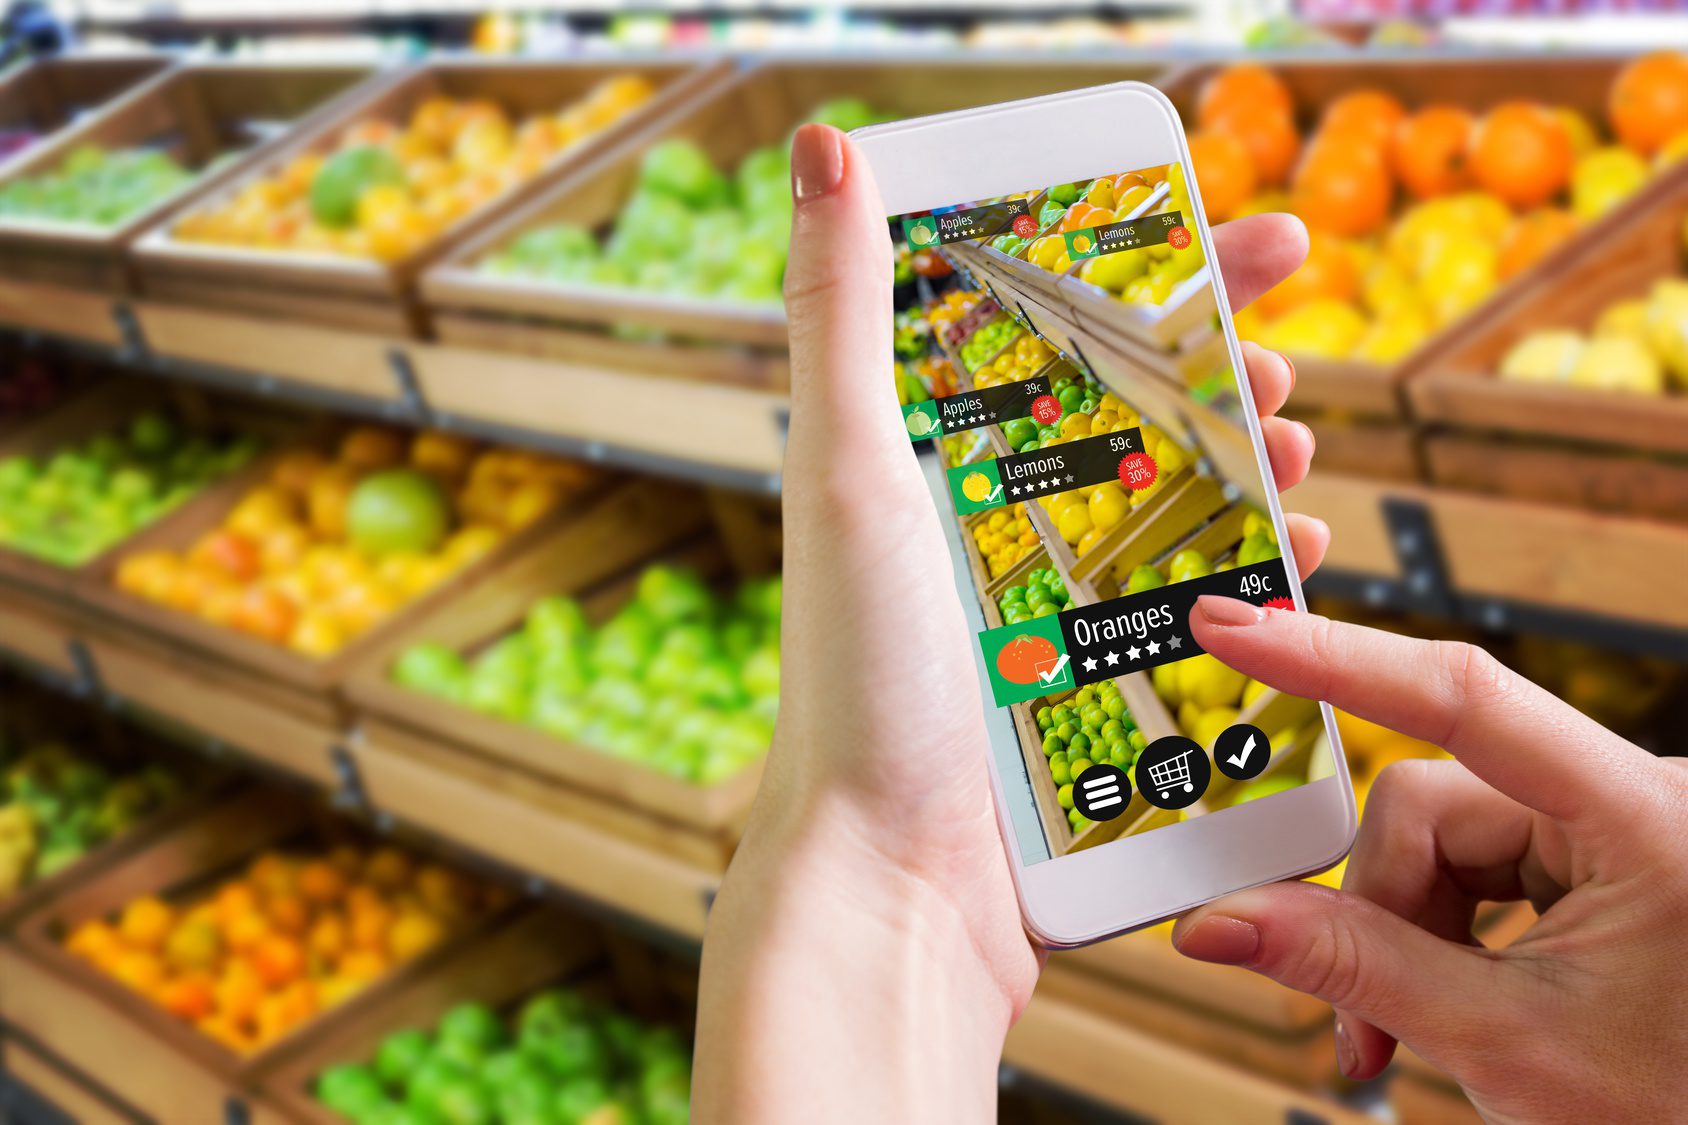 Amazon: Prepared to Digitalize Grocery Business